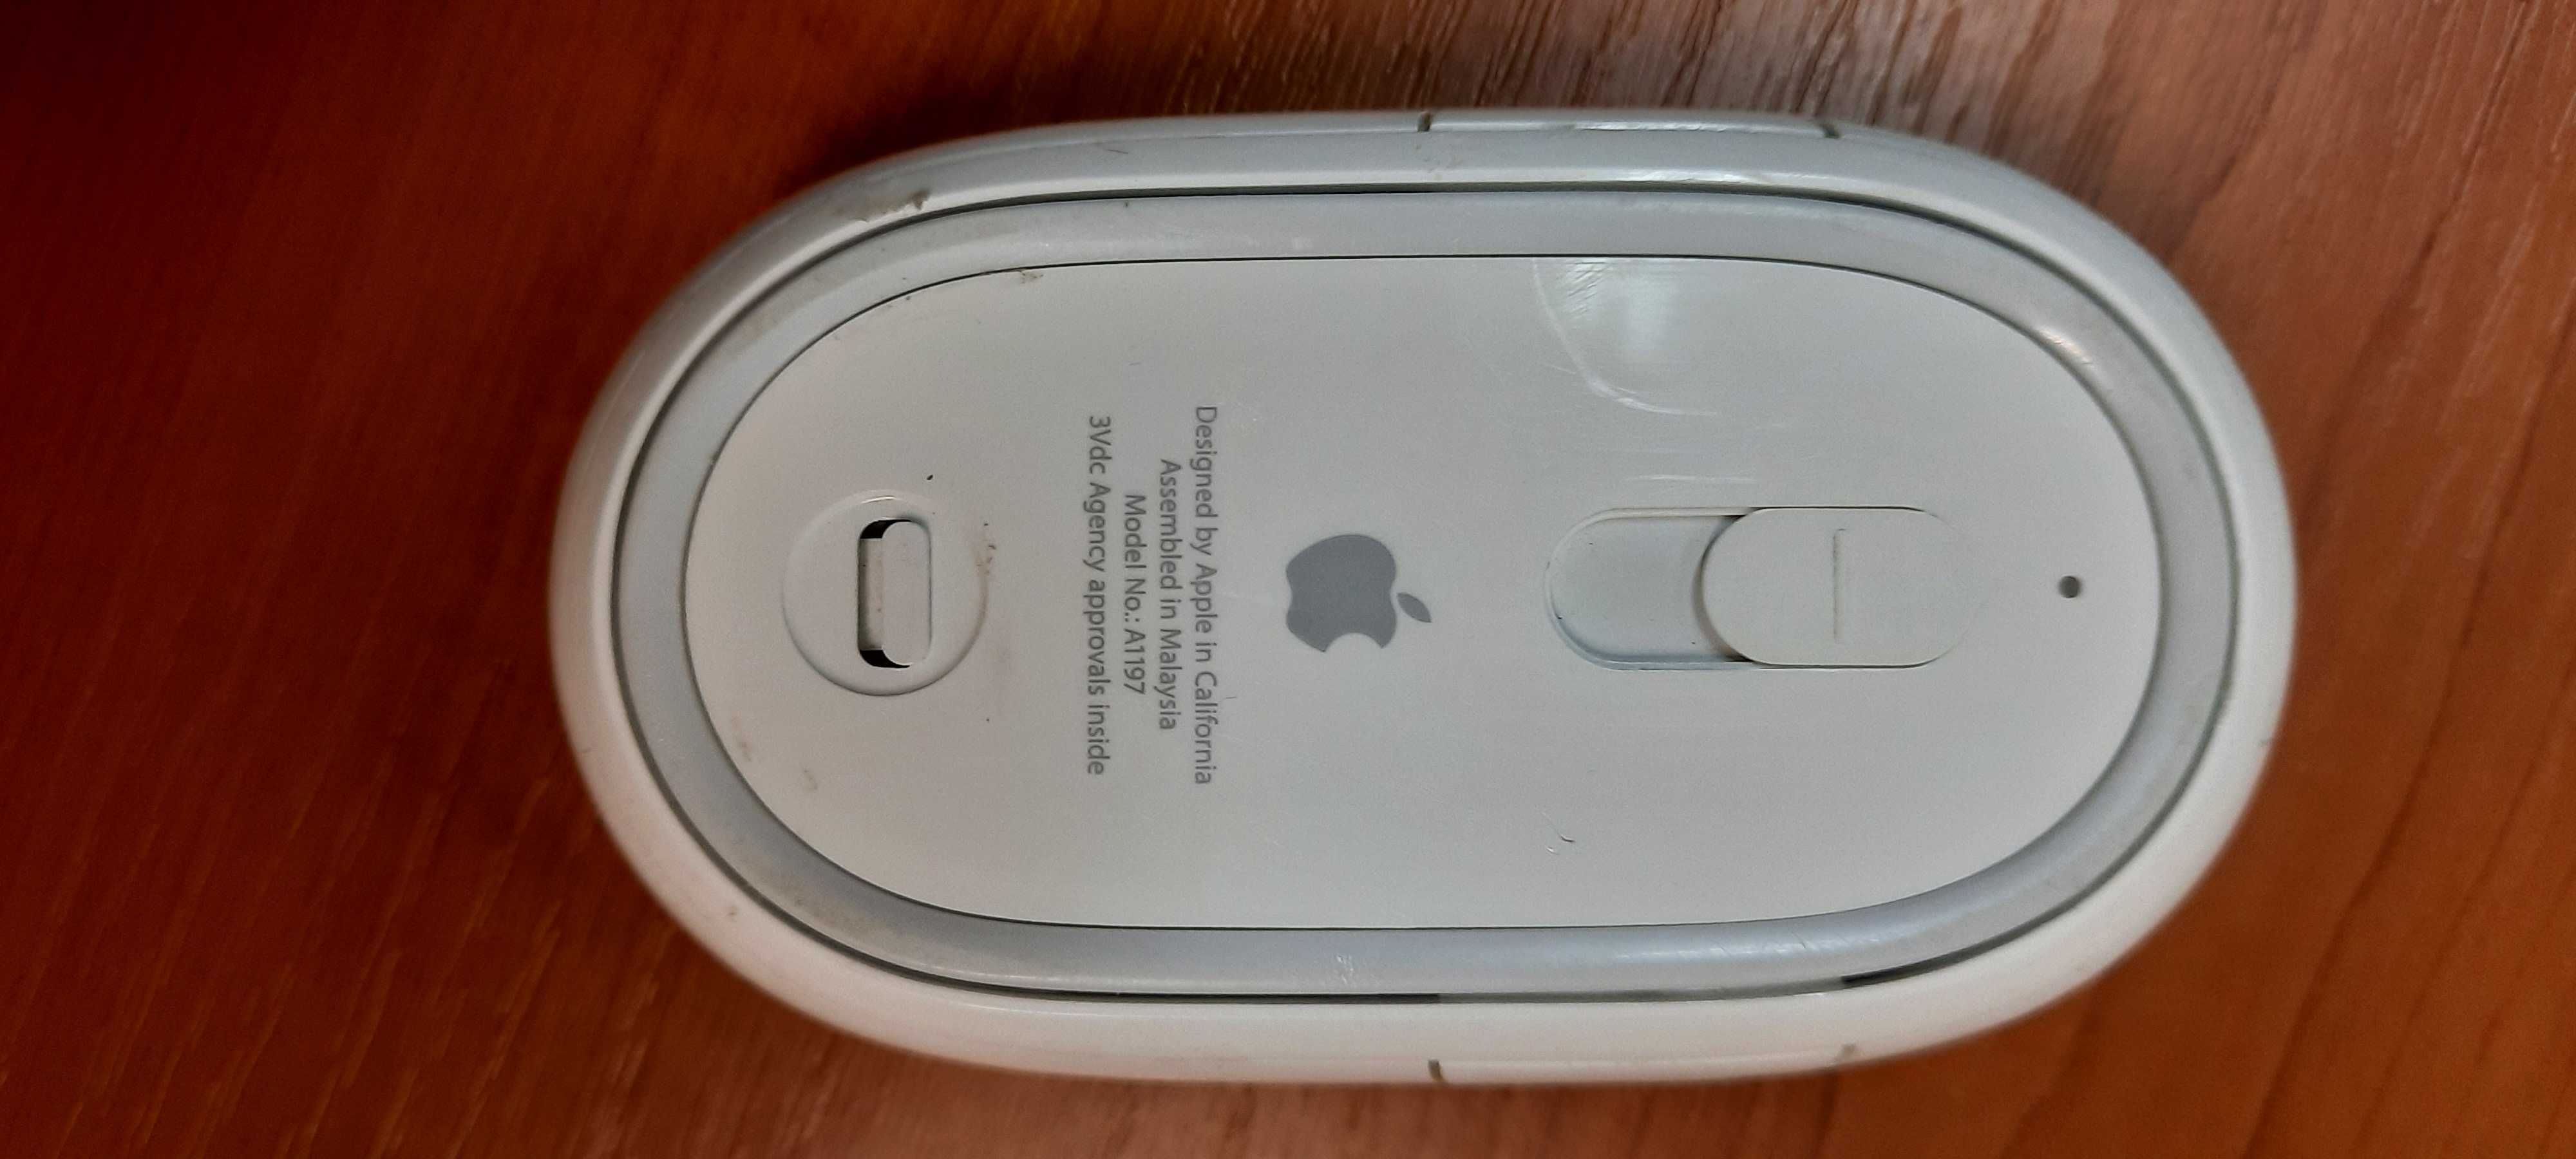 Apple Wireless Mouse,  model A1197